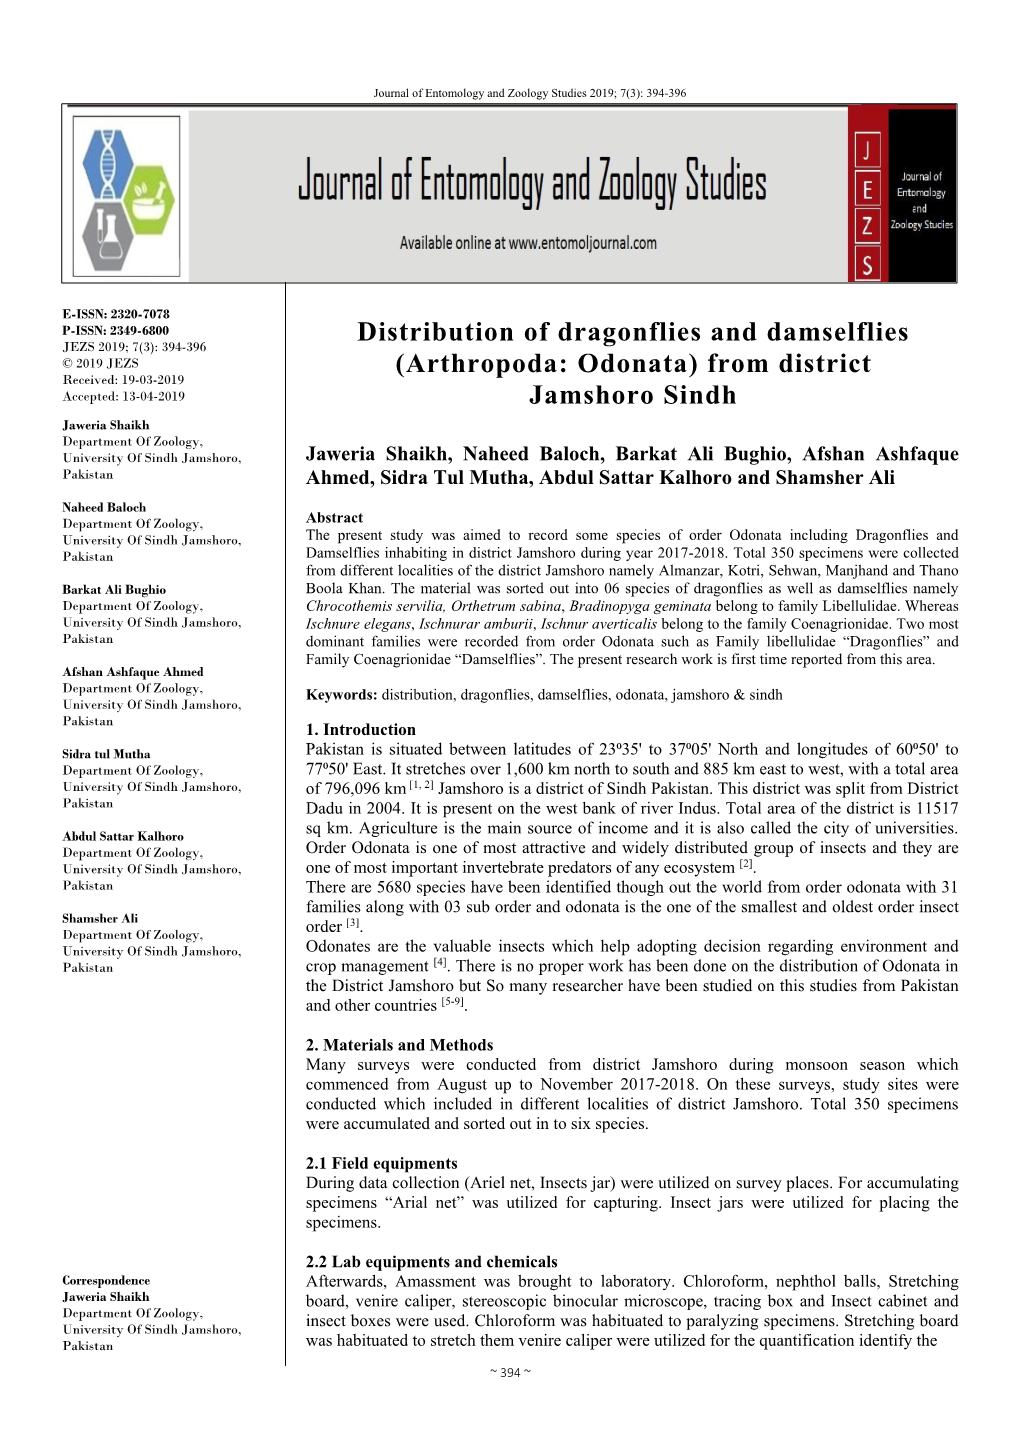 Distribution of Dragonflies and Damselflies